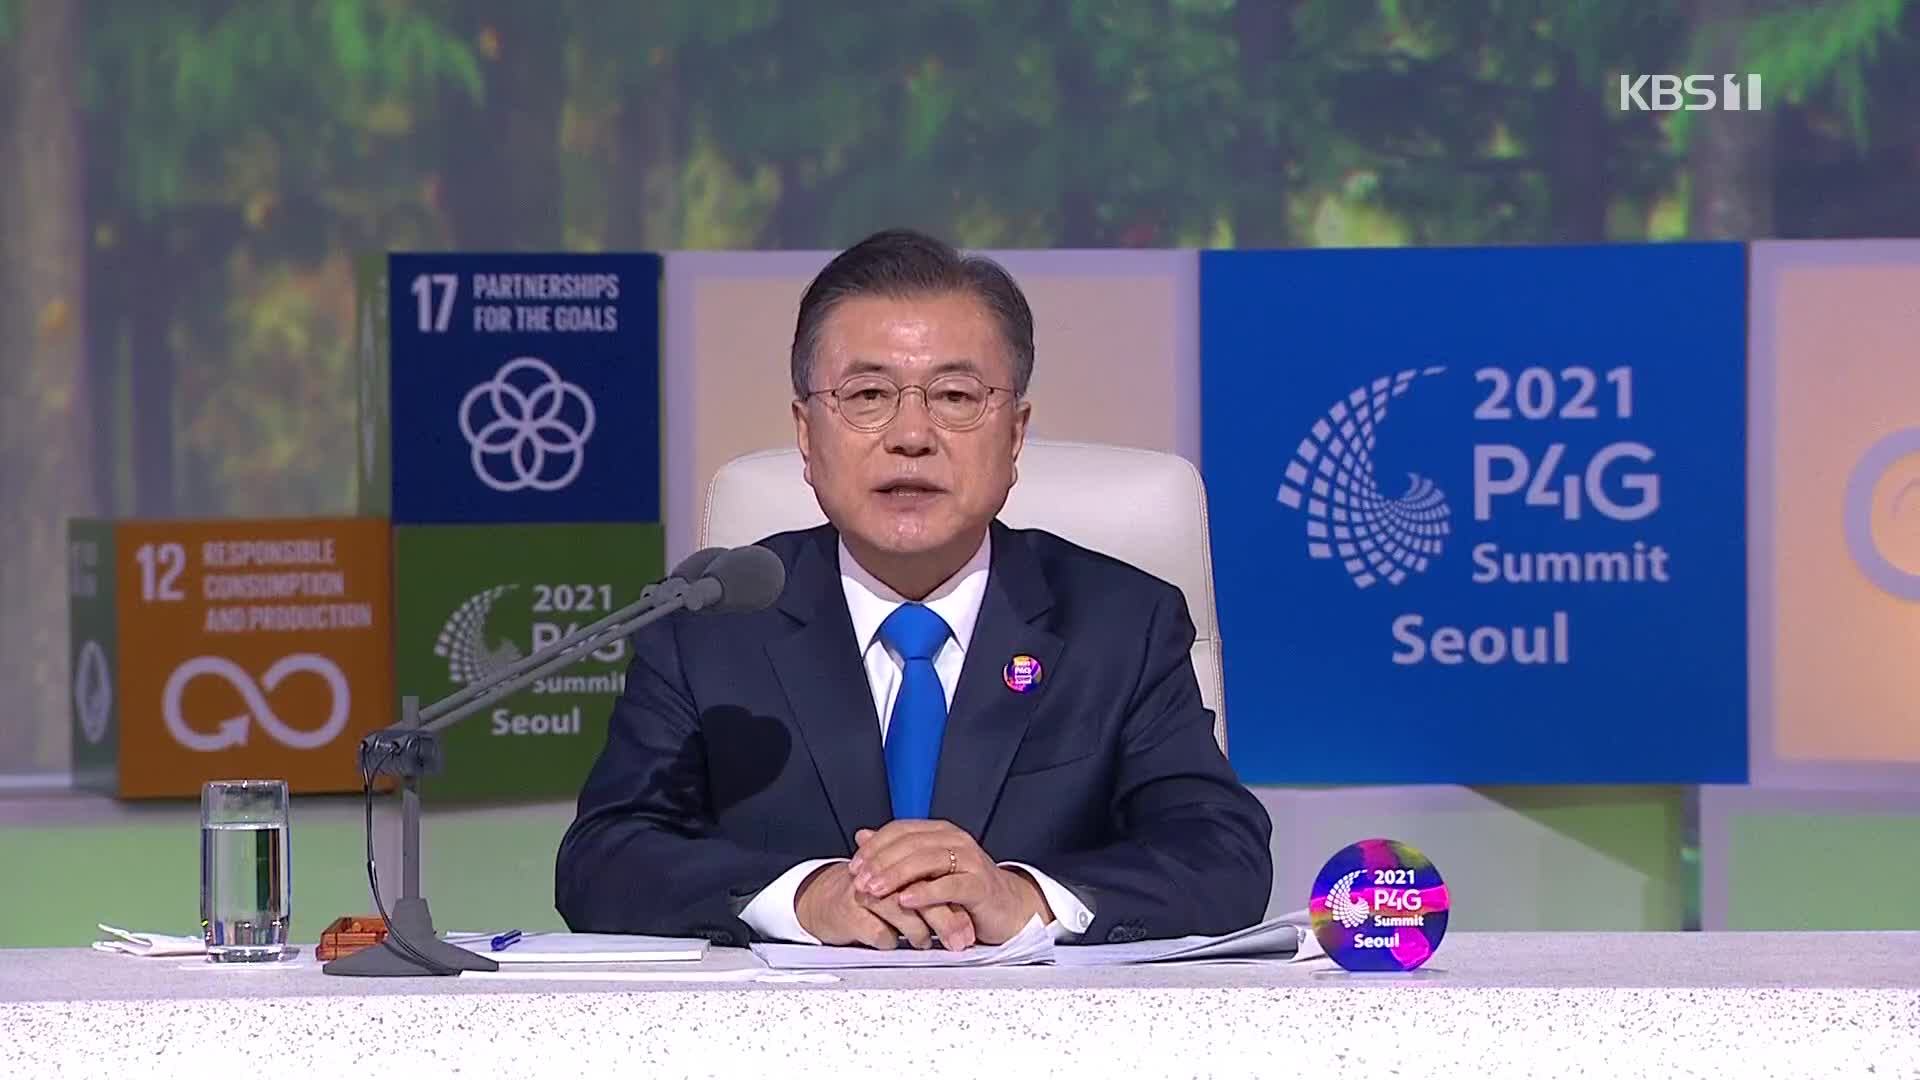 P4G 정상회의 폐막…“에너지 전환 가속화” 서울선언문 채택